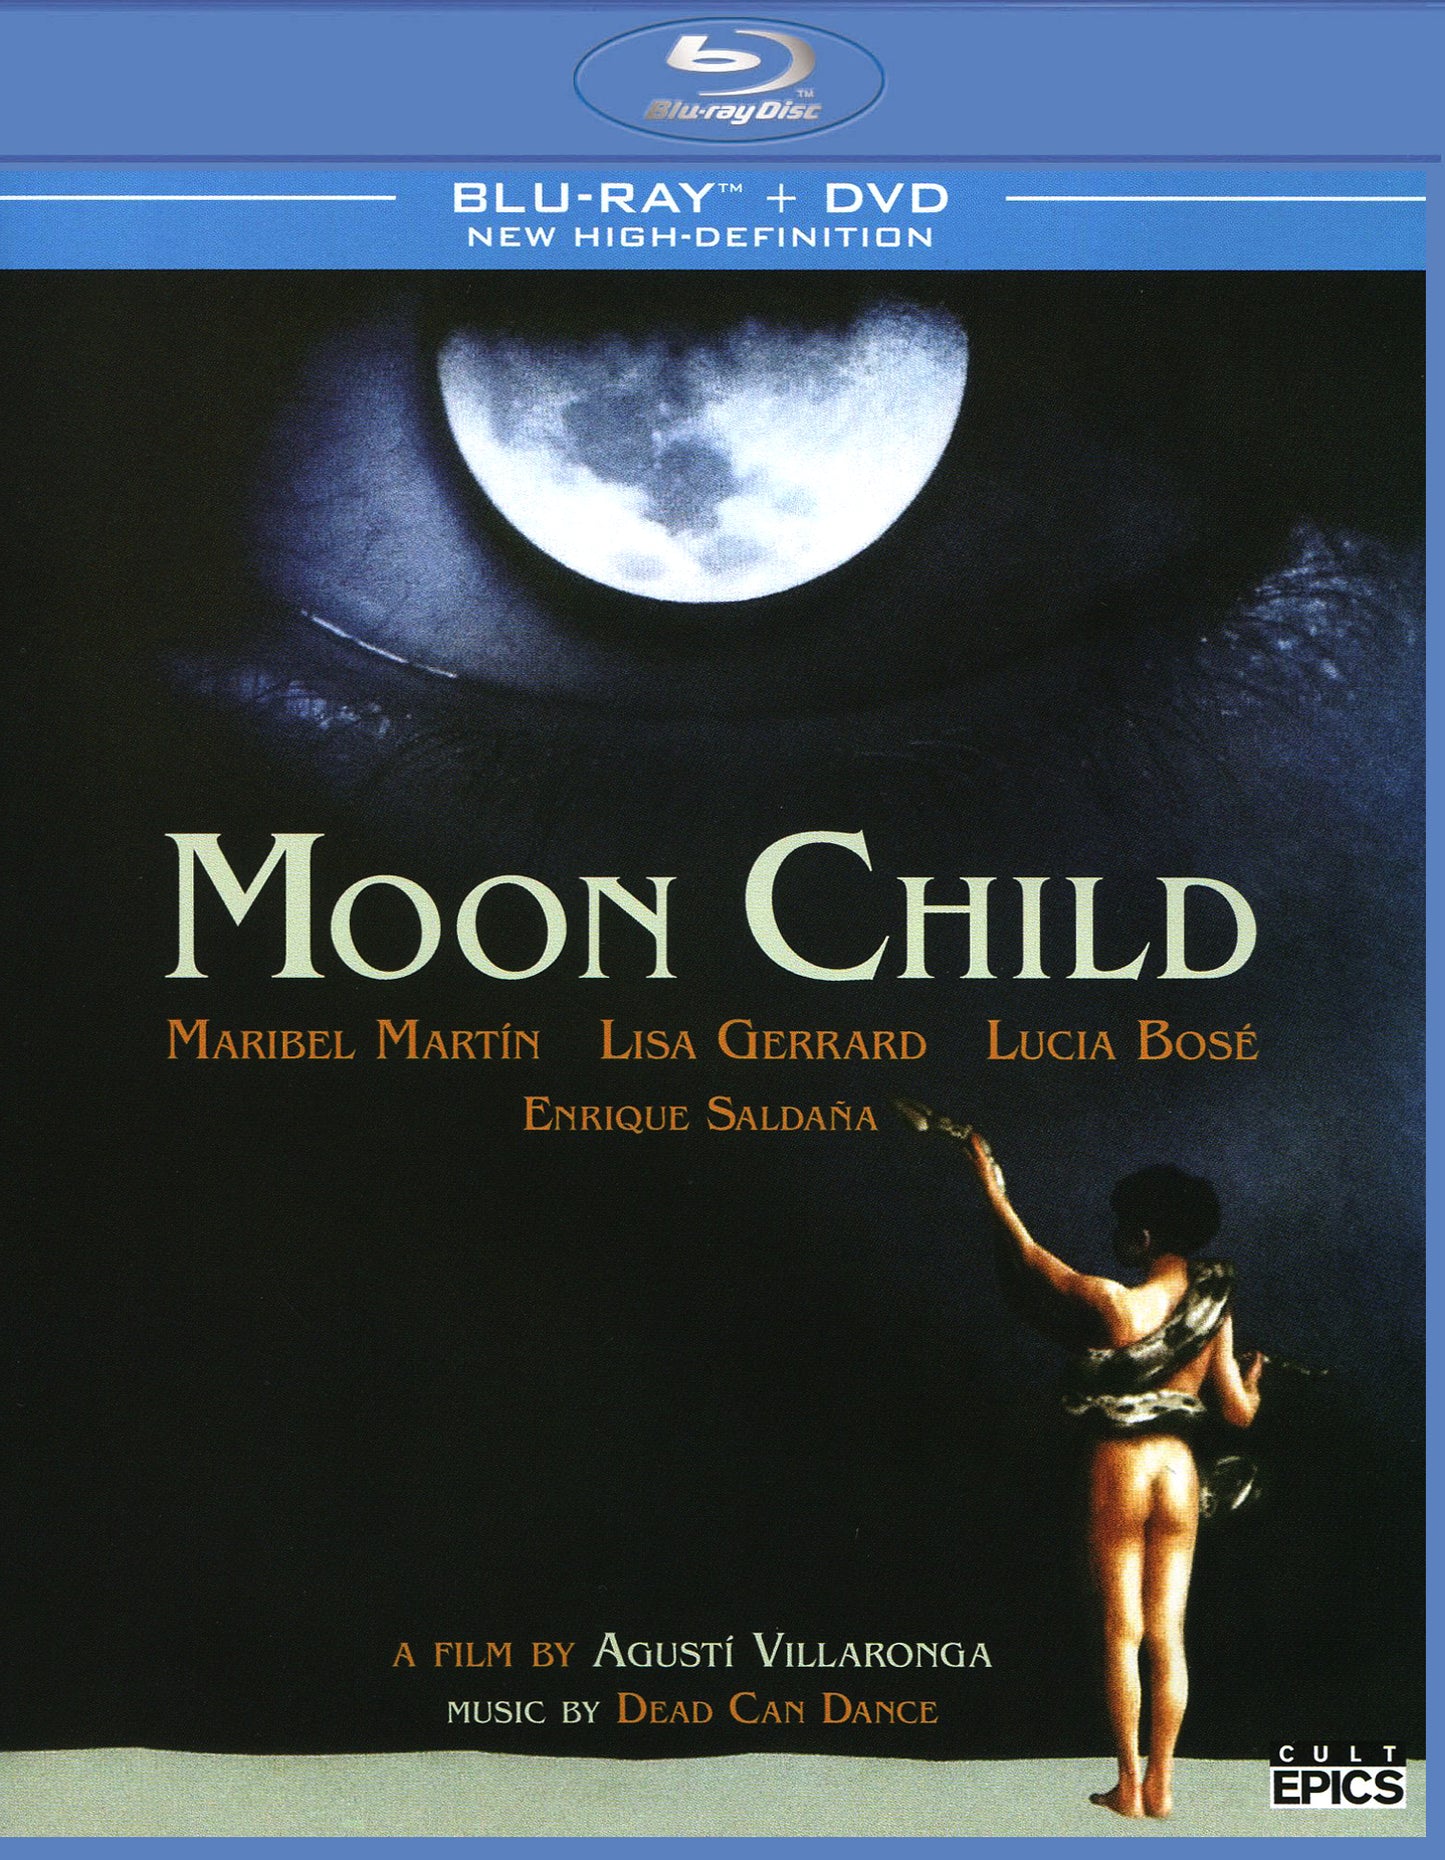 Moon Child [Blu-ray] cover art